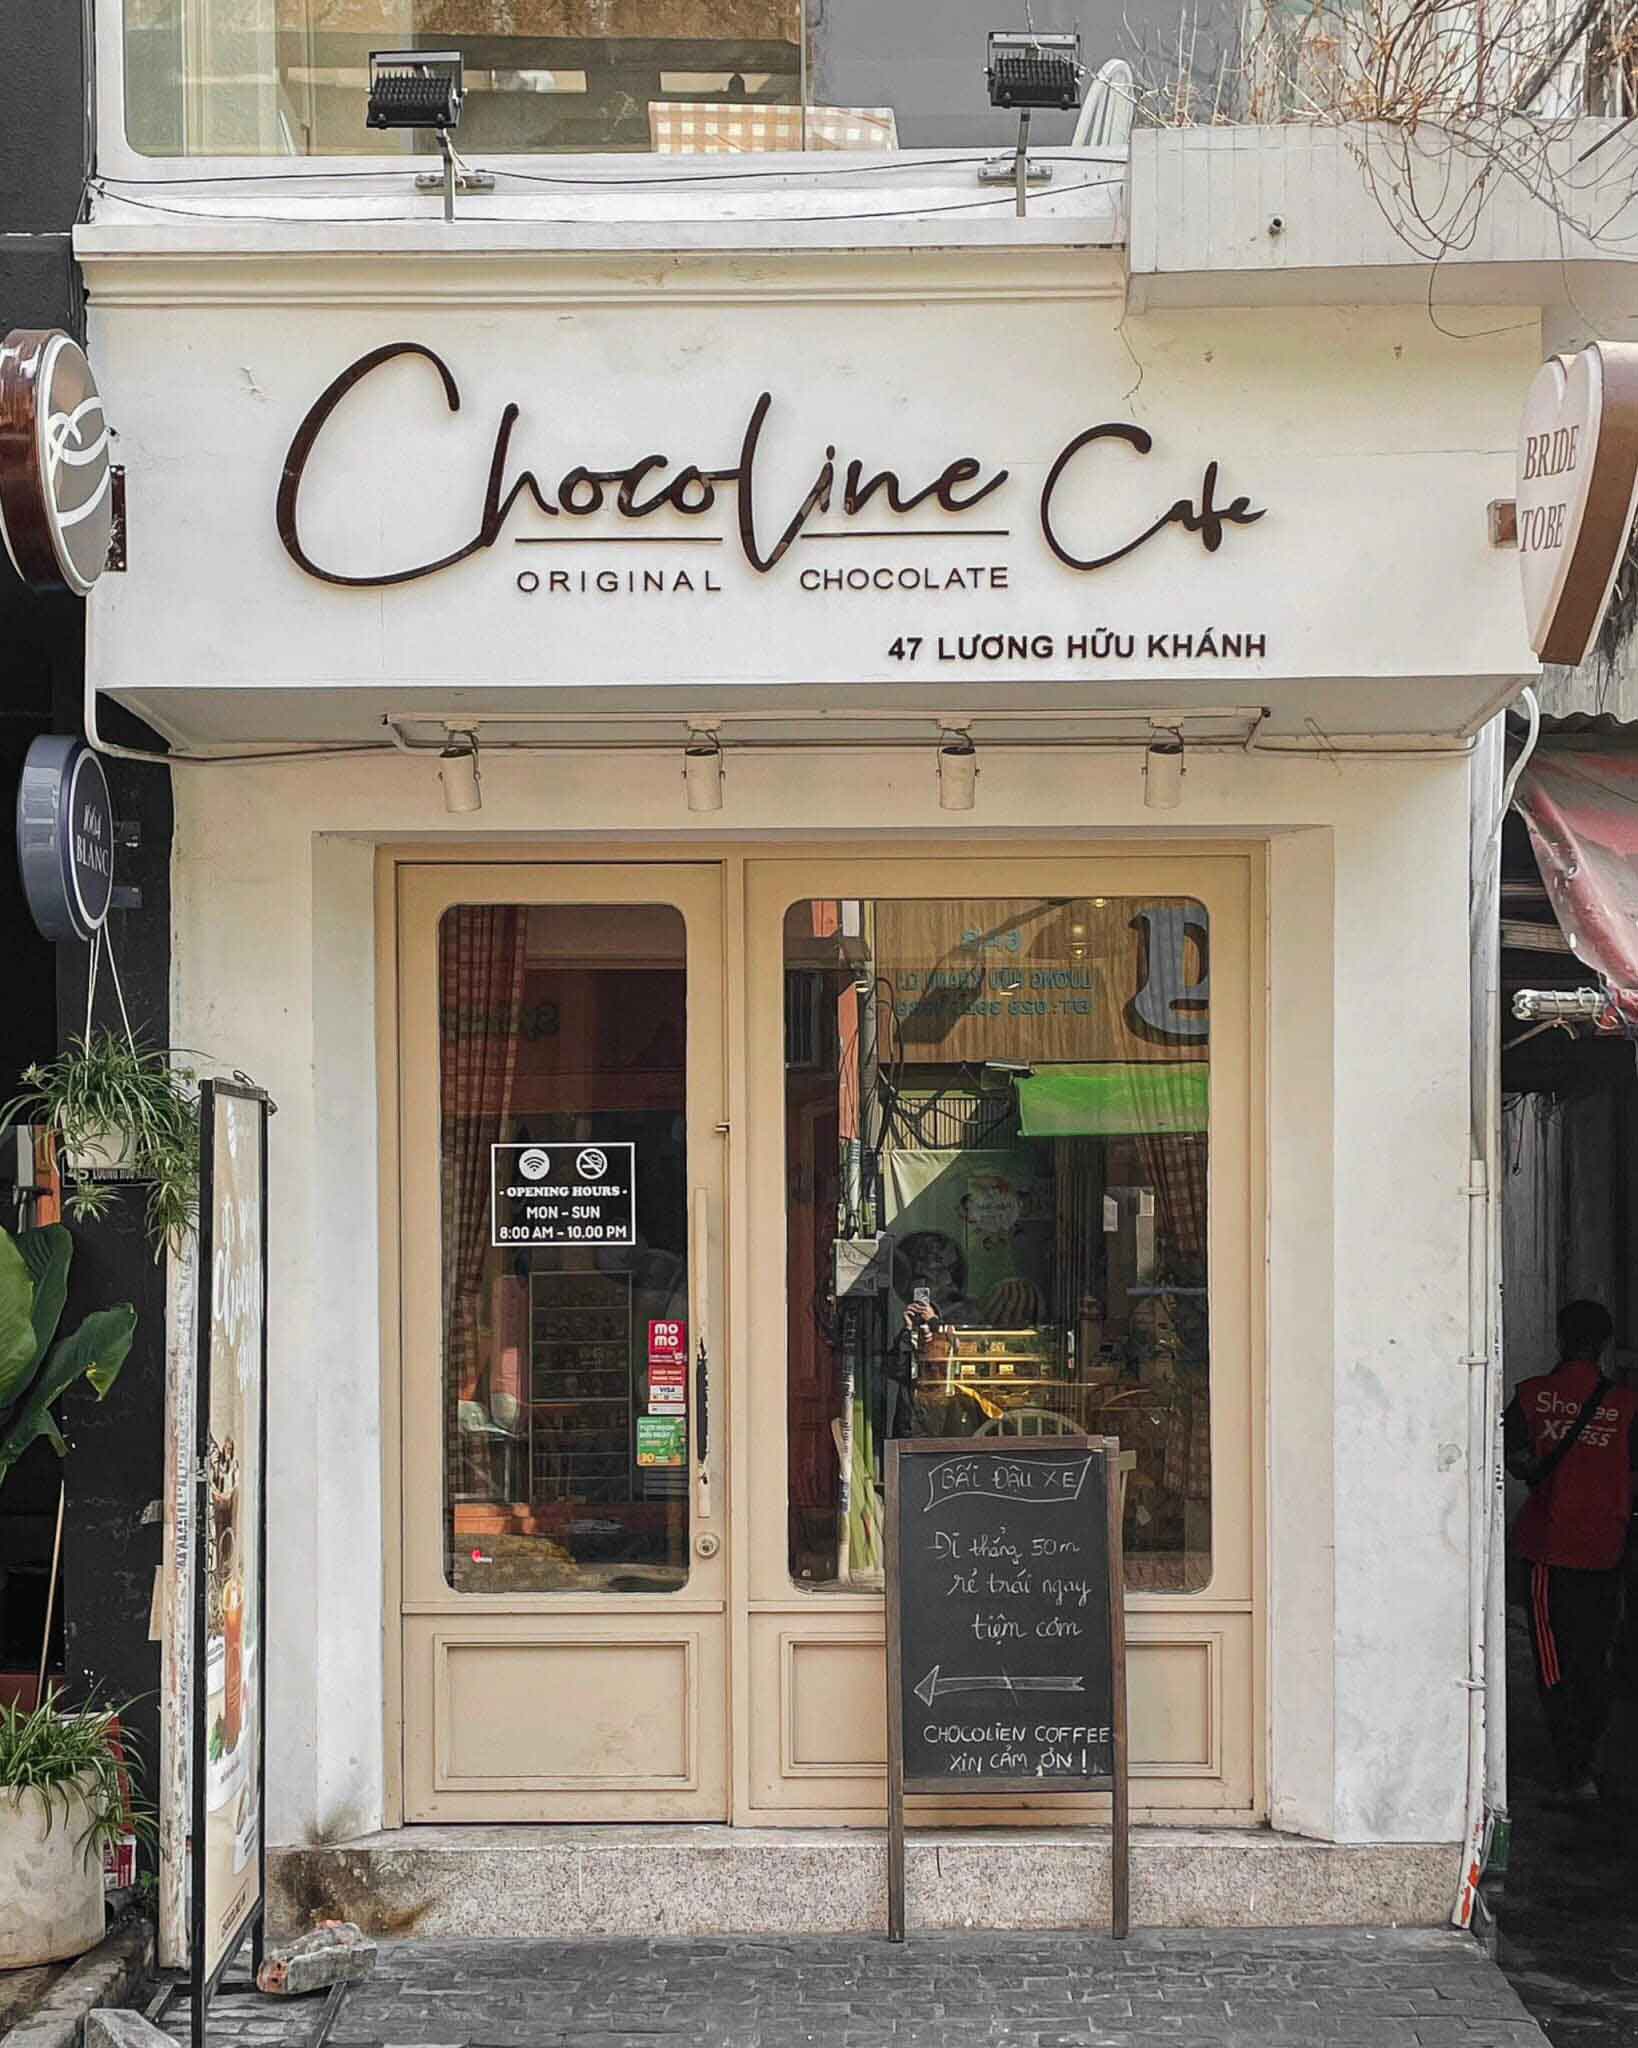 Chocoline Cafe & Chocolate